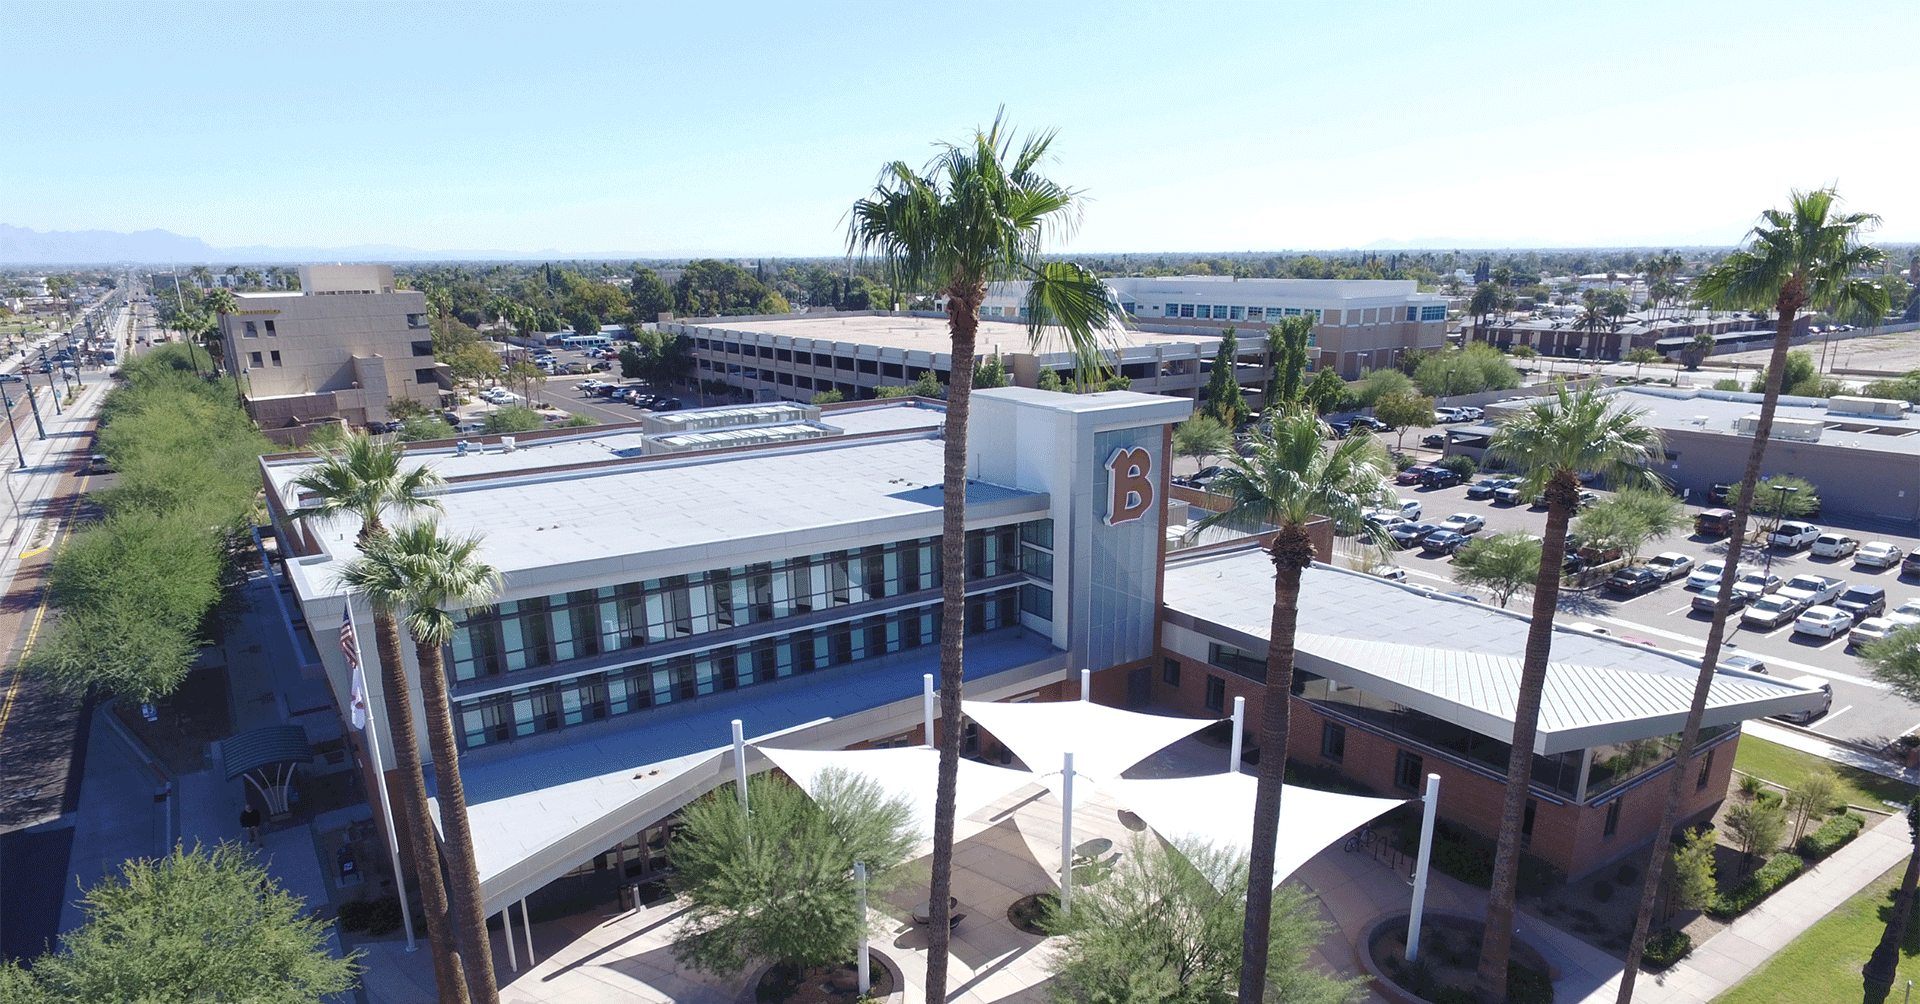 Mesa Campus, aerial view of Gillett building